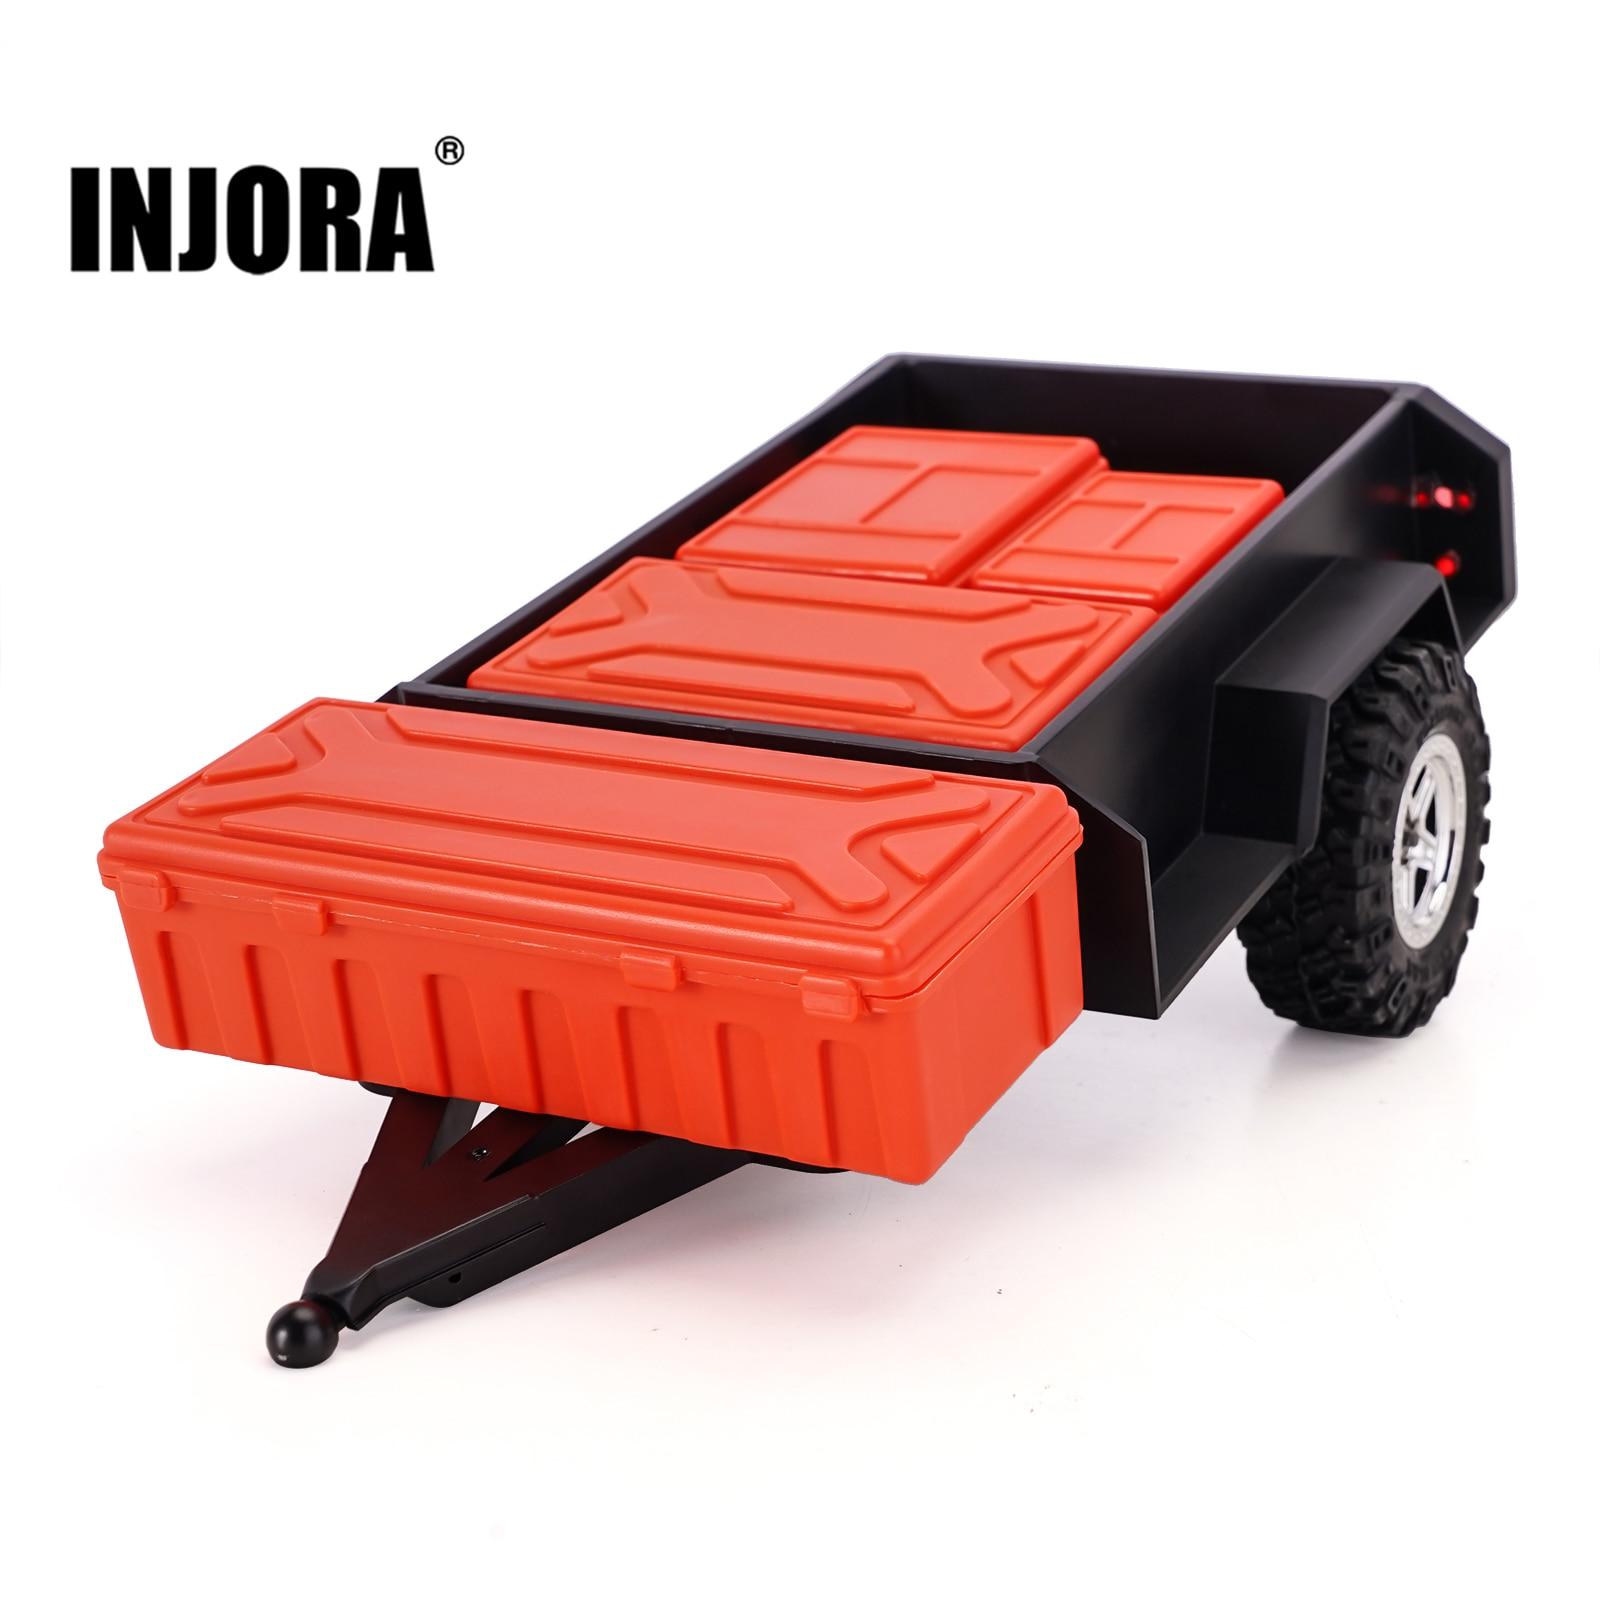 INJORA-Utility-Trailer-with-Hitch-For-1-18-RC-Crawler-Car-TRX4M-Upgrade.jpg